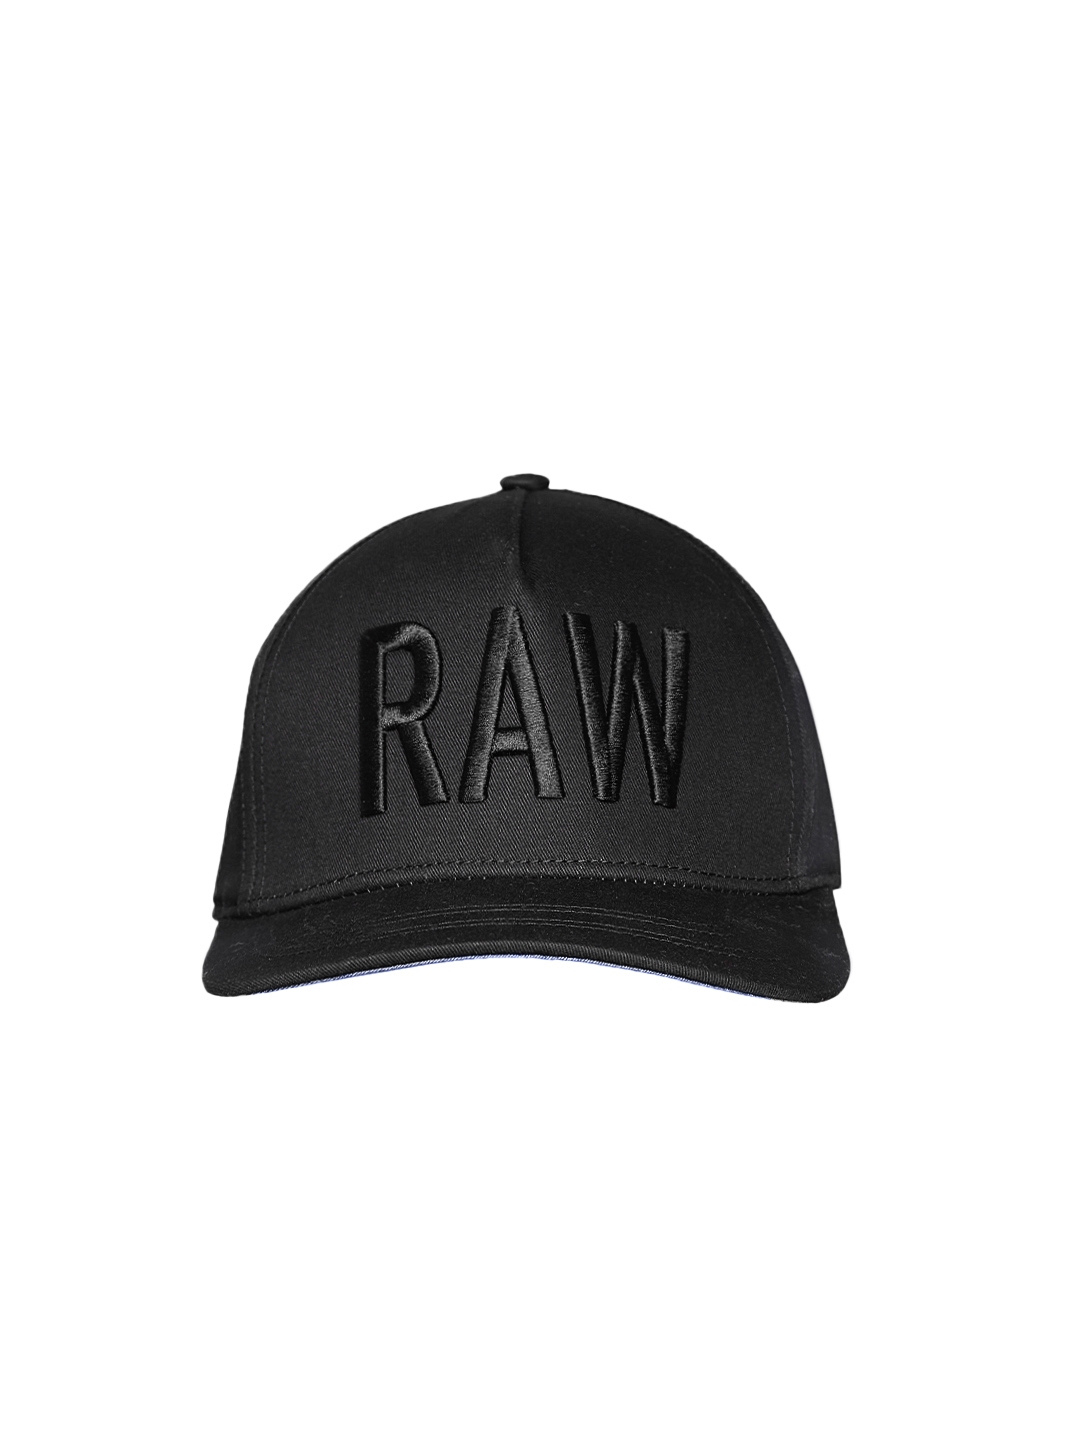 Buy G STAR RAW Men Black Embroidered Cap - Caps for Men 1474170 | Myntra